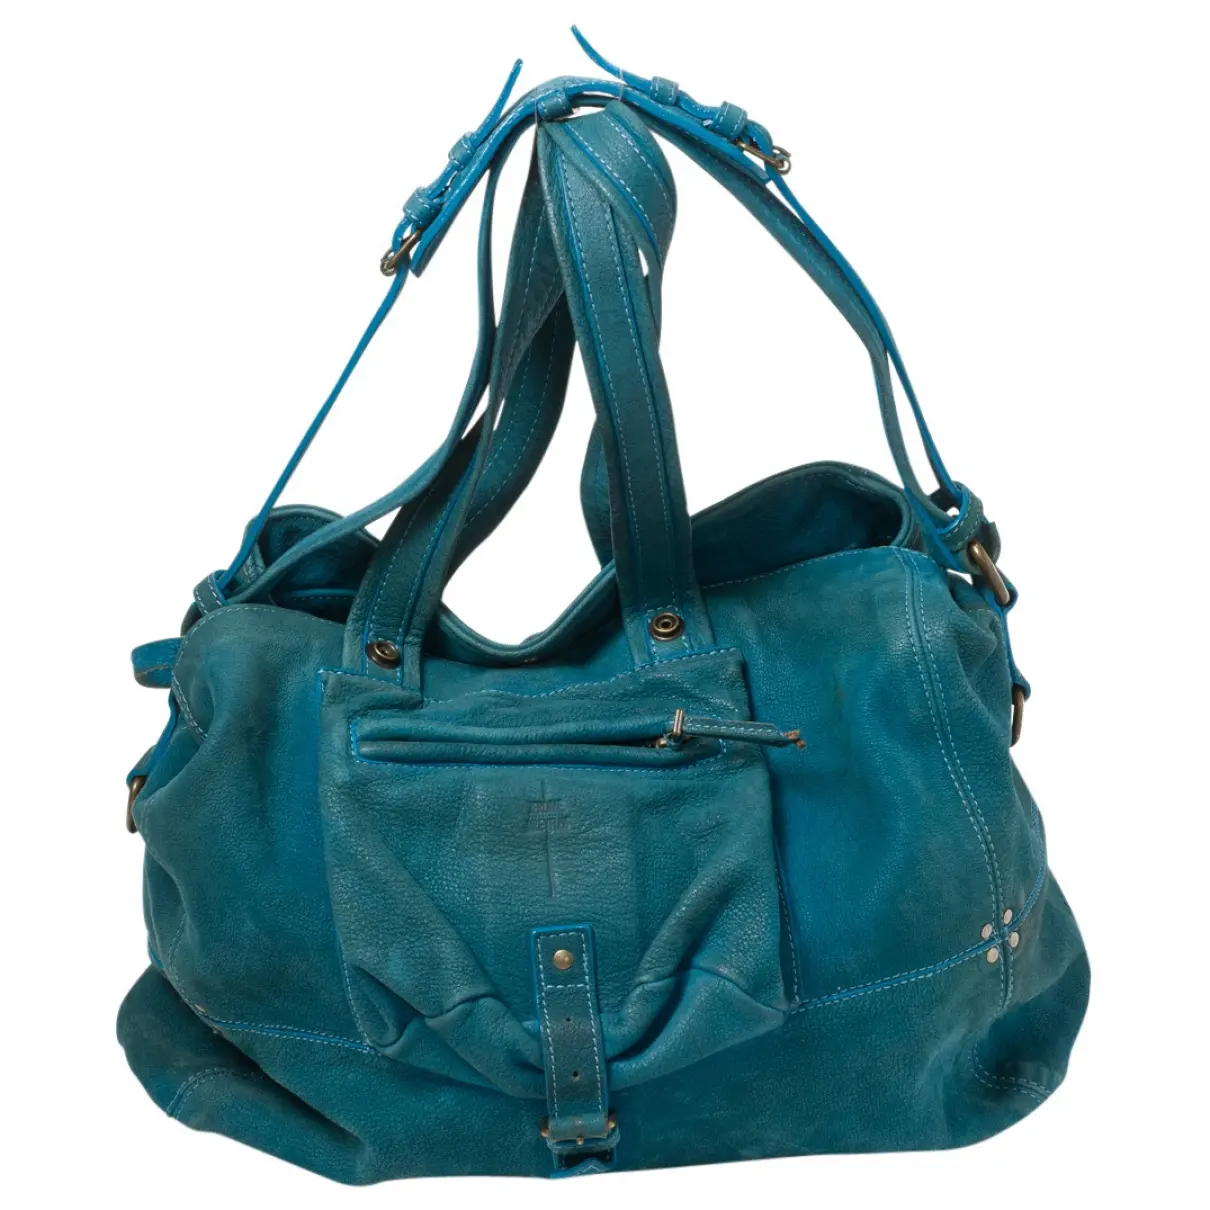 Blue Leather Handbag Jerome Dreyfuss